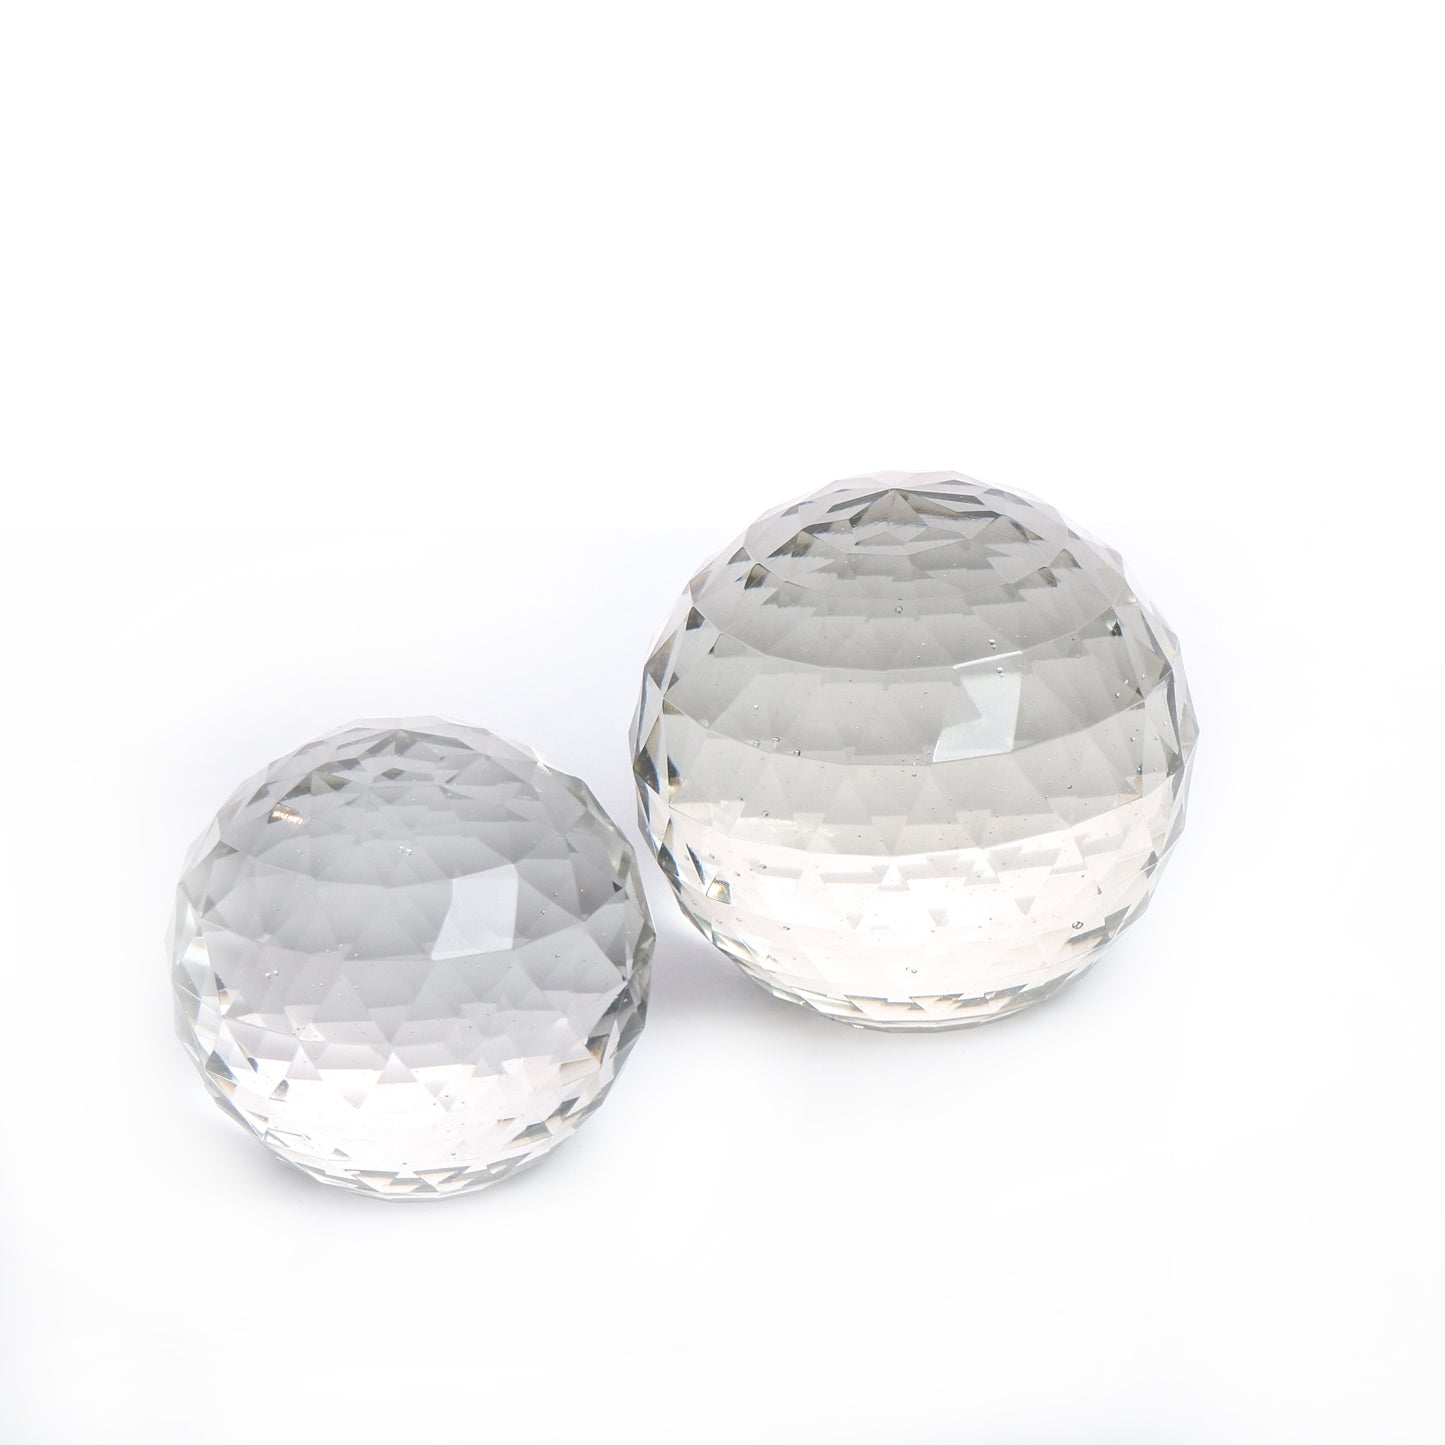 Set of 2 elegant round crystals